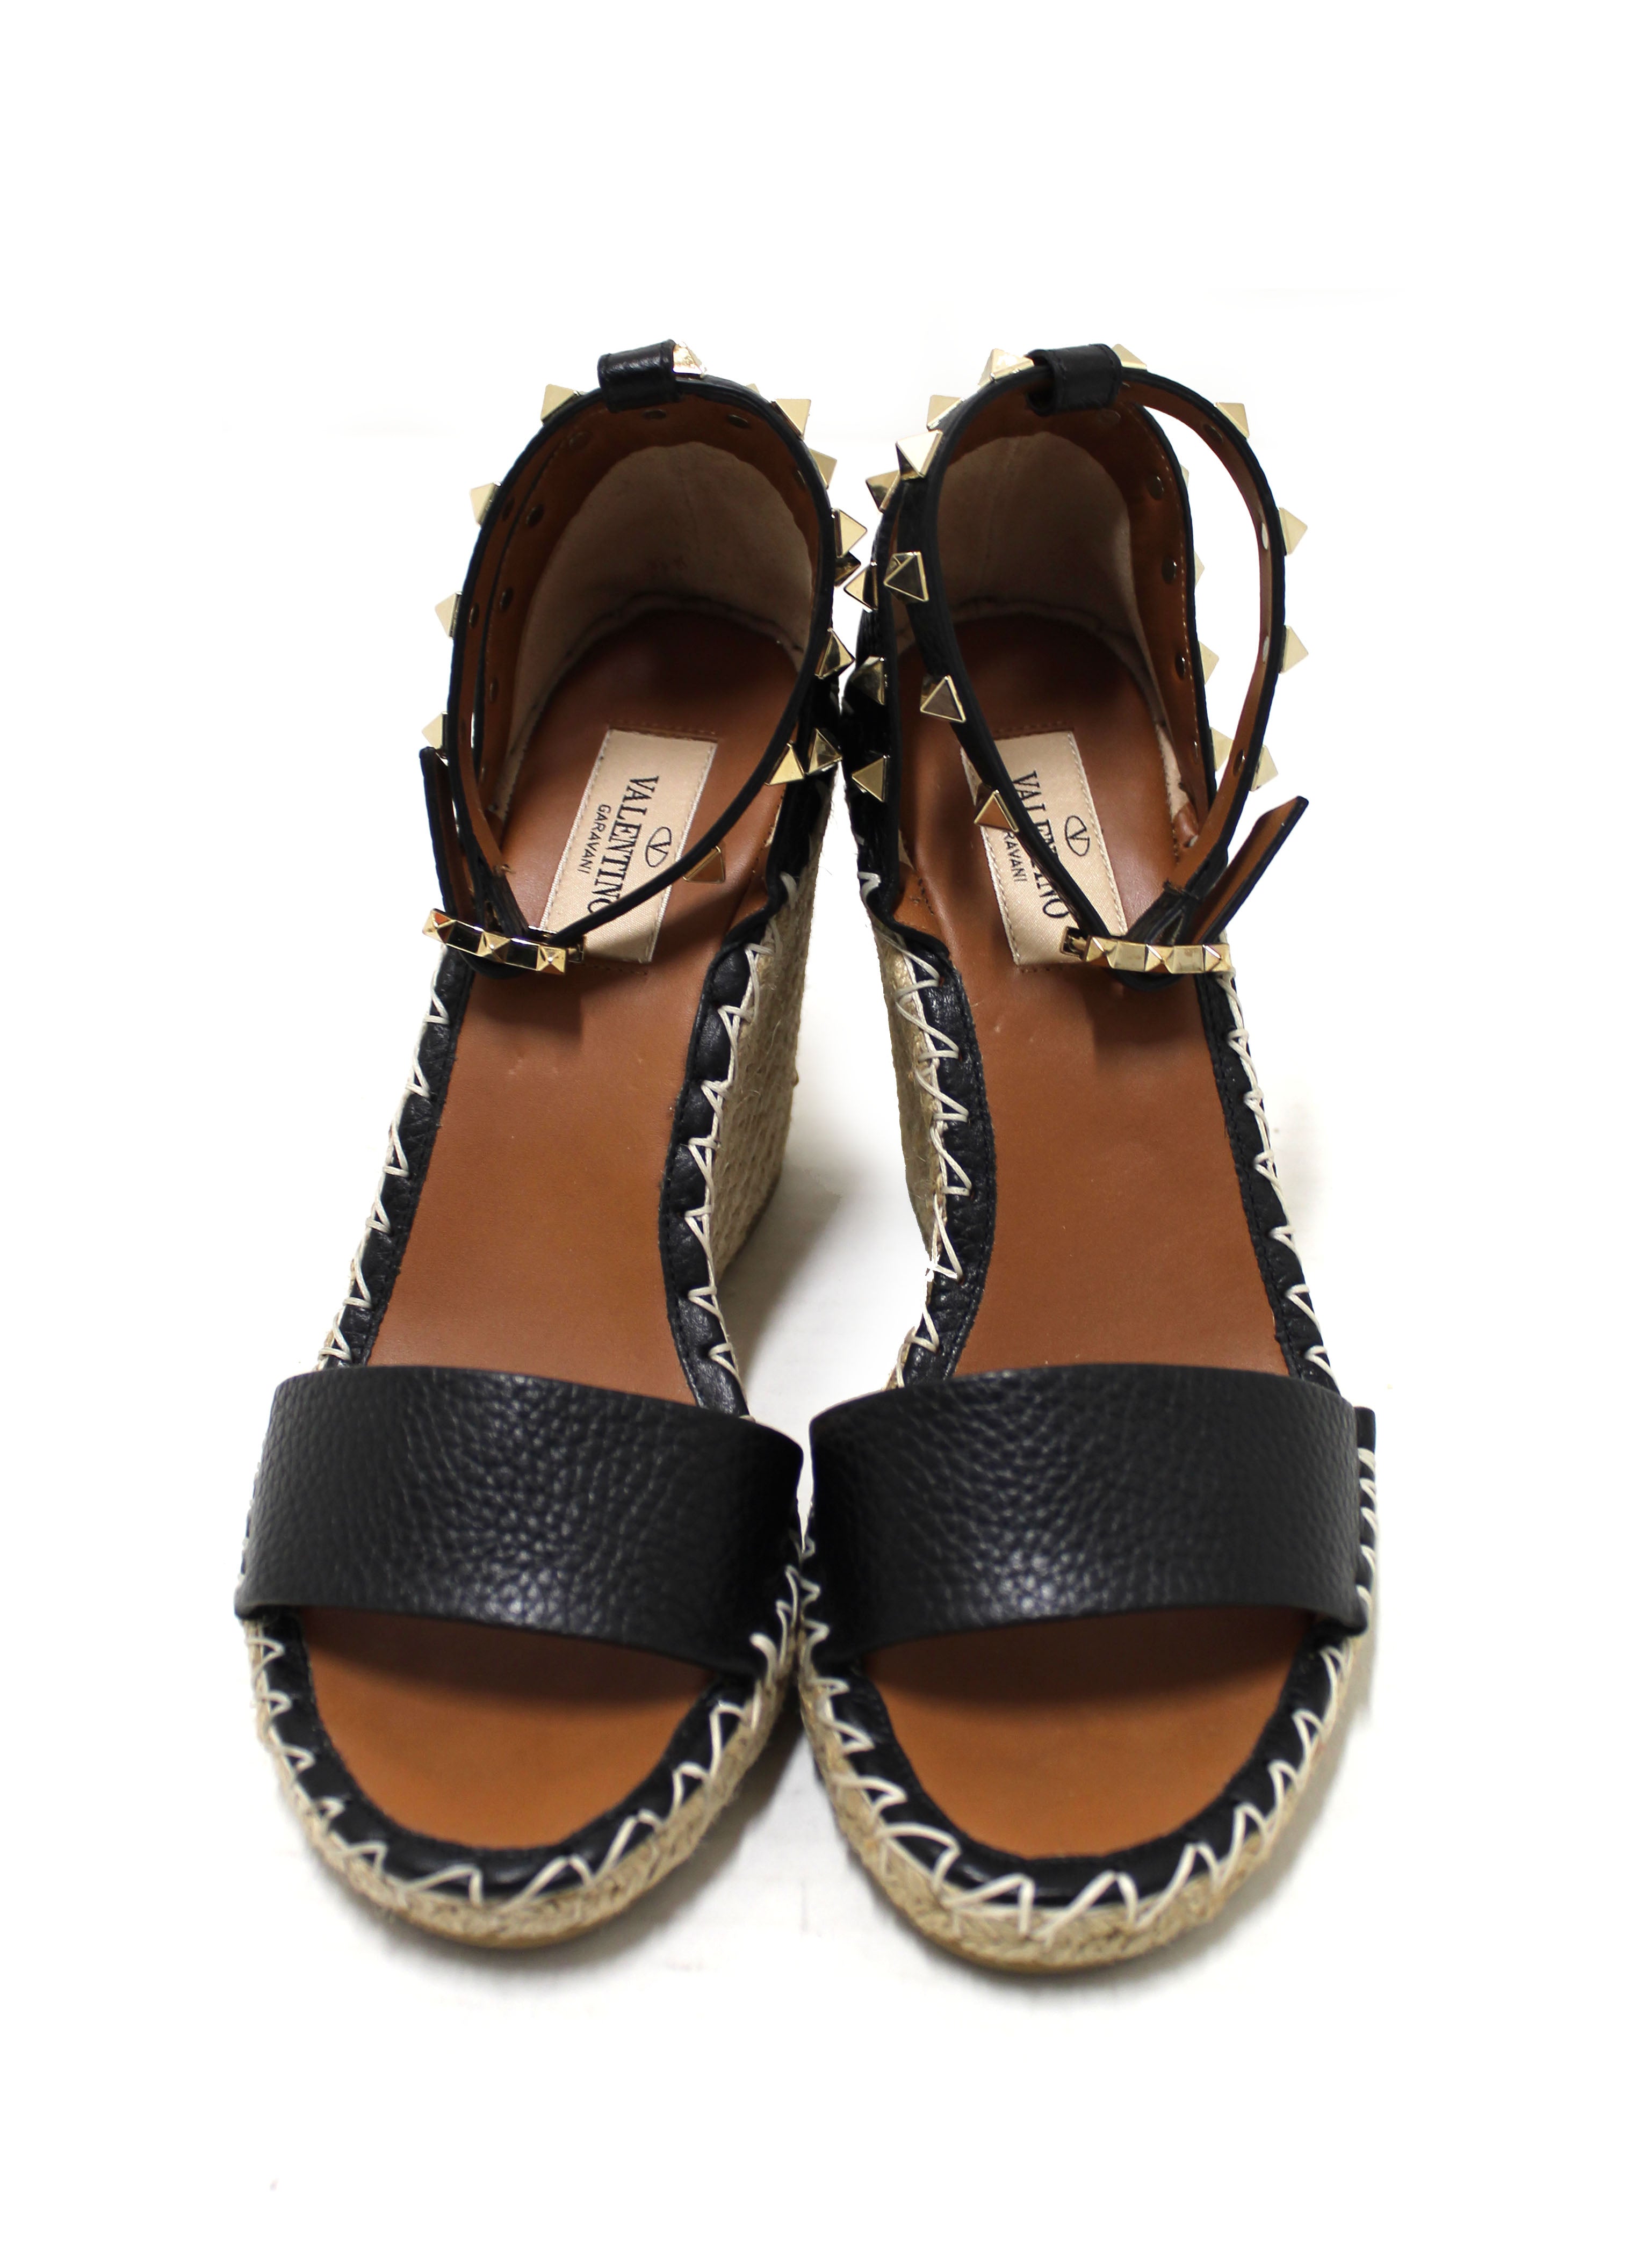 Authentic Valentino Black Leather Rockstud Wedge Heel Sandal Shoes 37